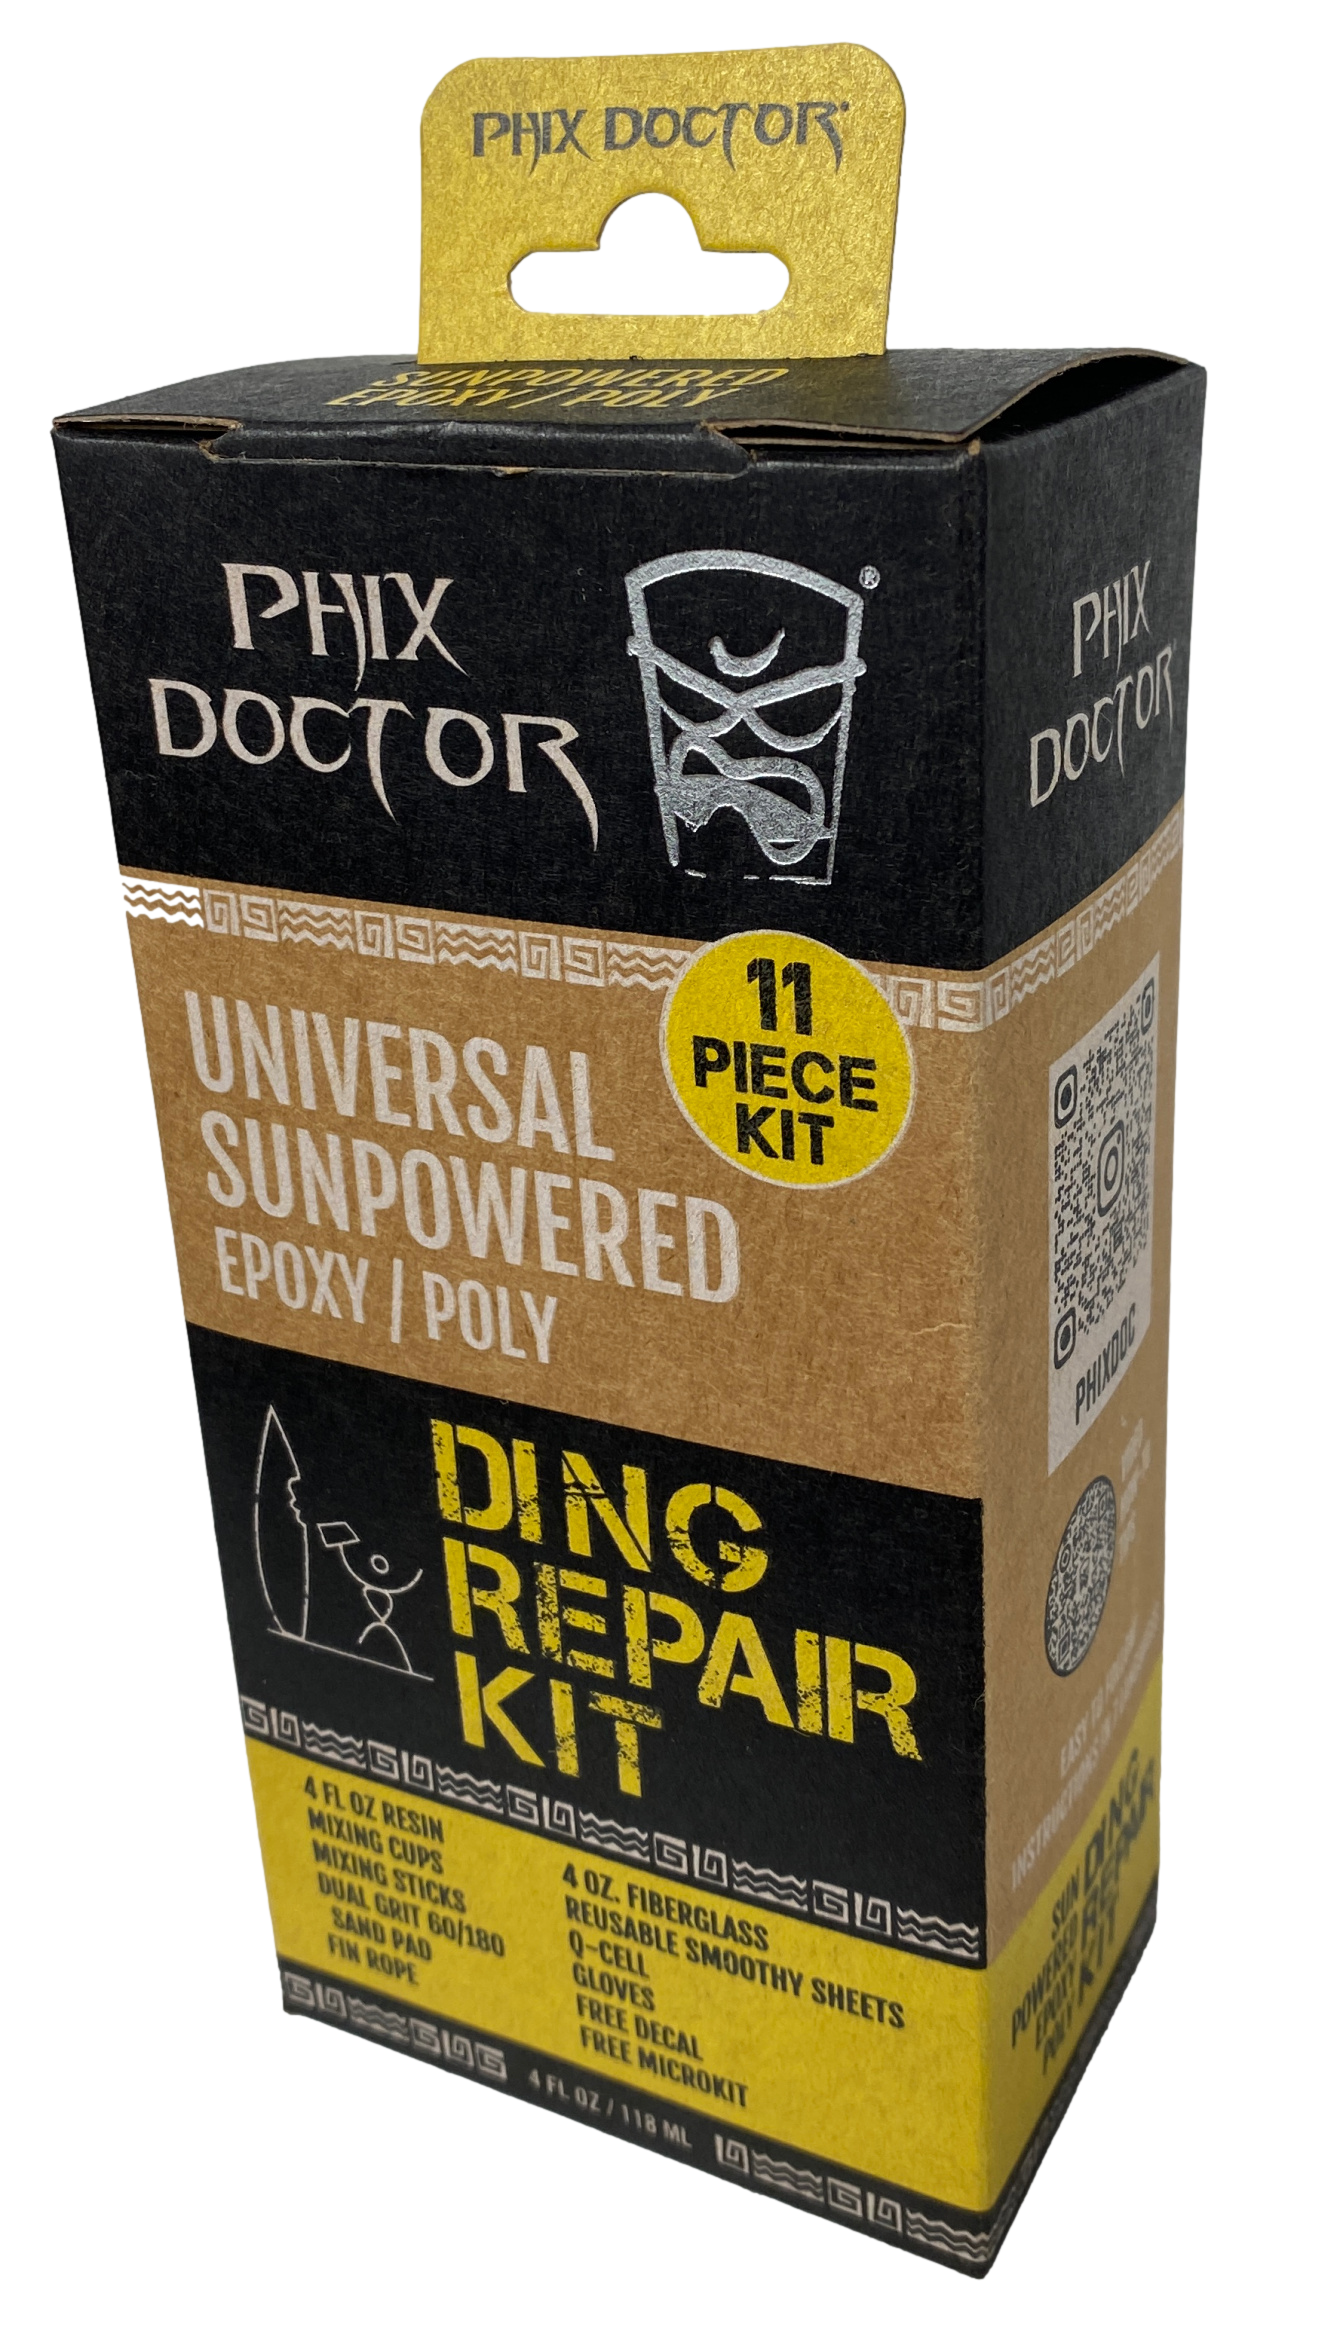 SunPowered Epoxy/Poly Repair Kit - UNIVERSAL! - Ding Repair Kits and Ding  Repair Resins by Phix Doctor